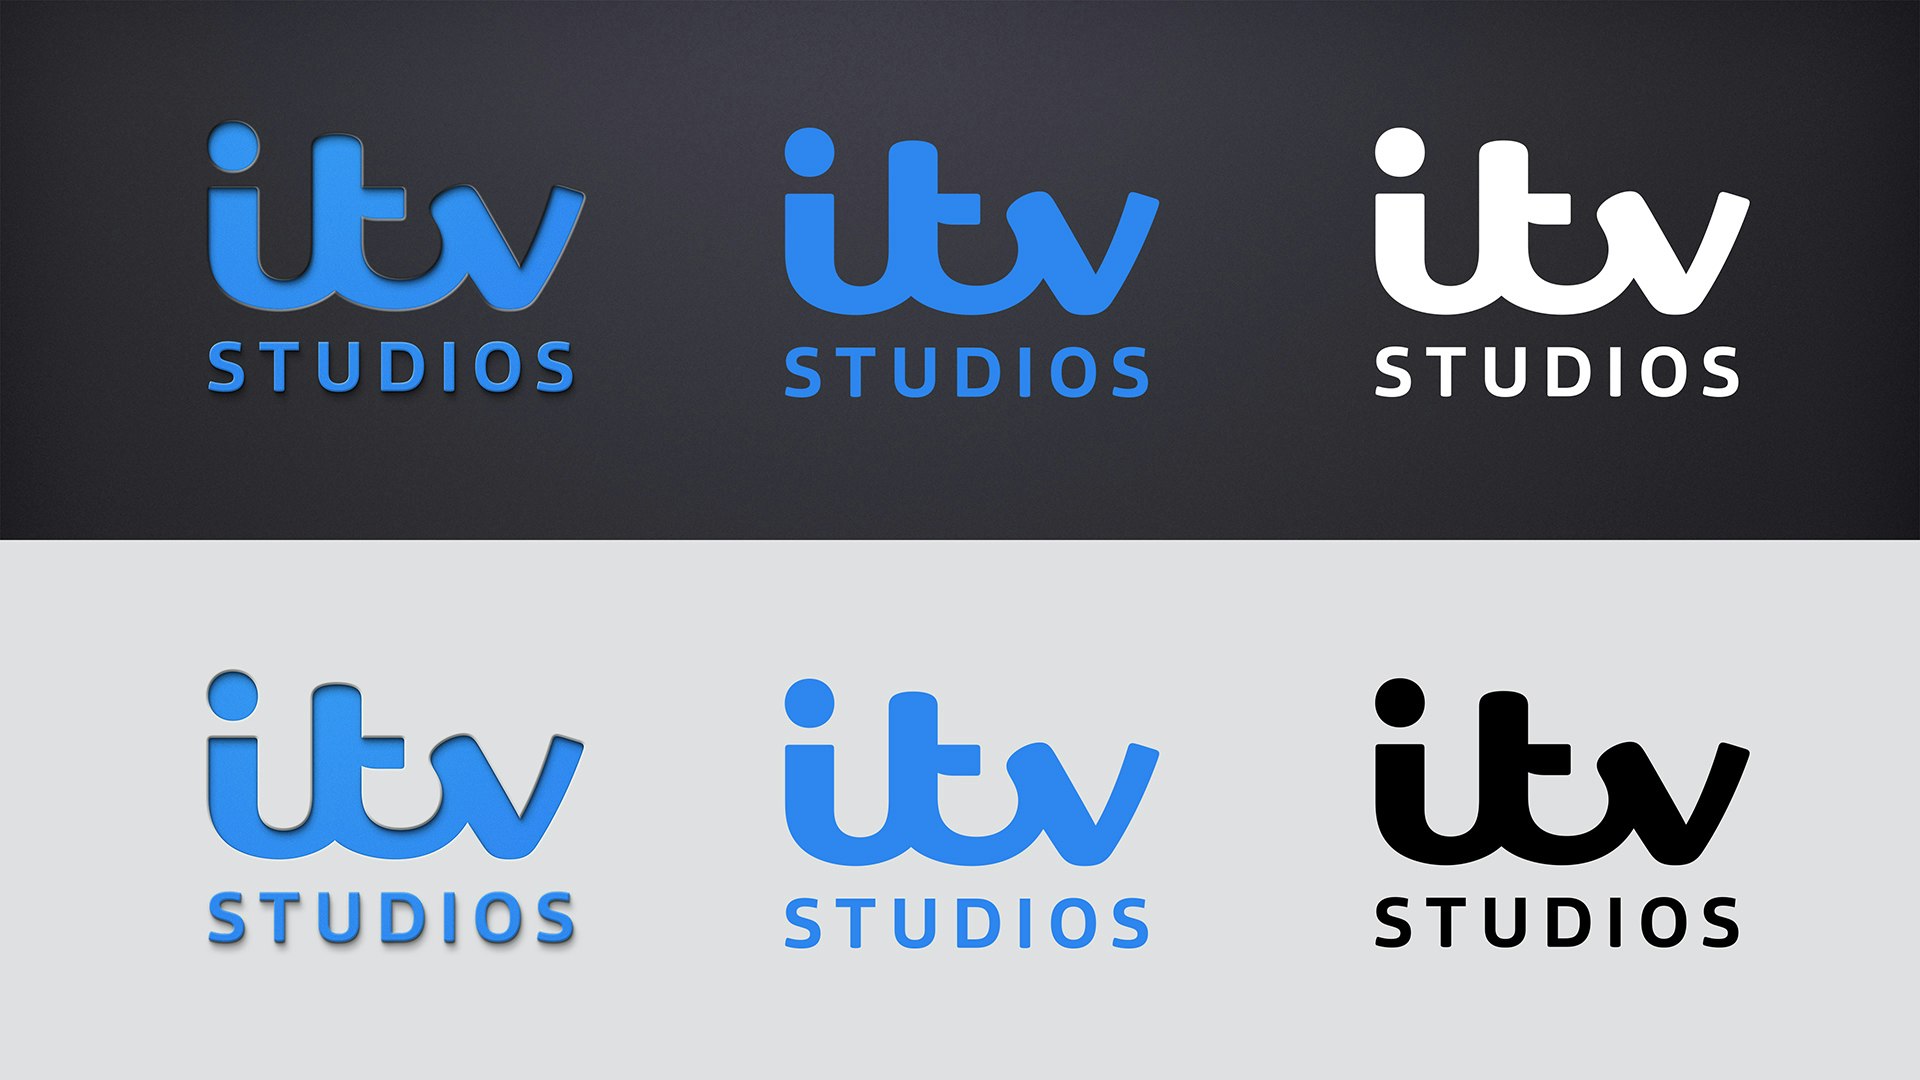 Jason Ford - ITV Studios Logos